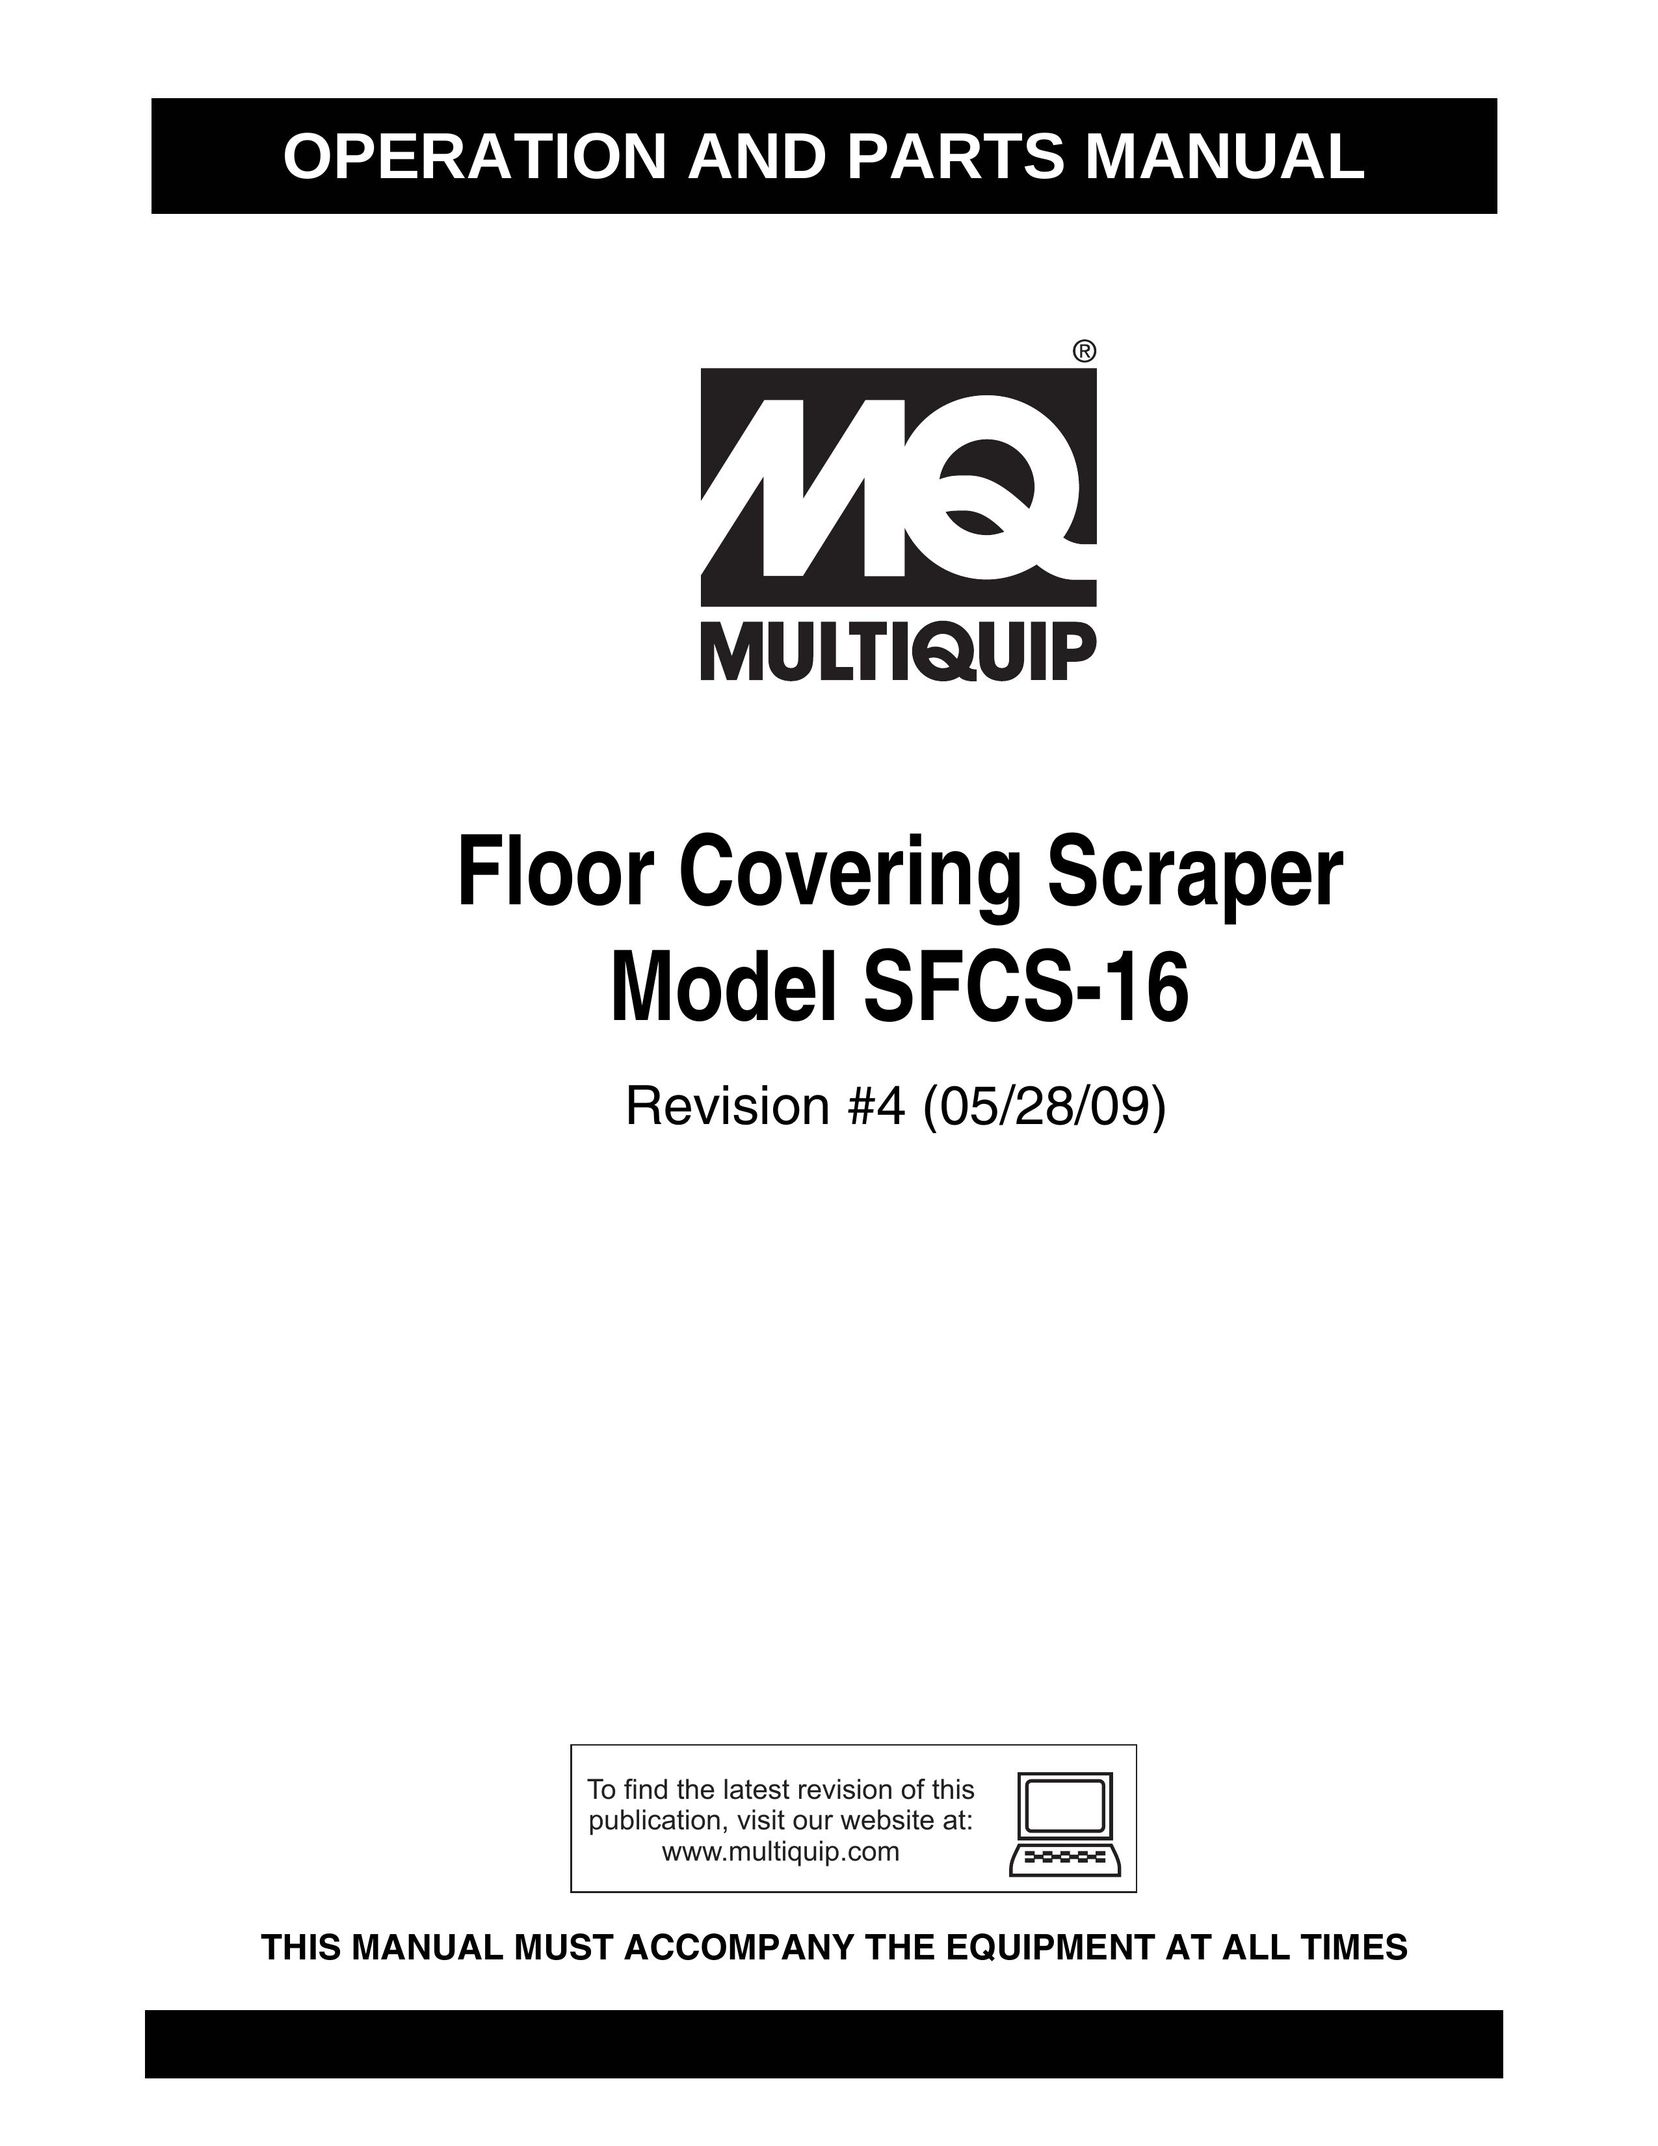 Multiquip SFCS-16 Sander User Manual